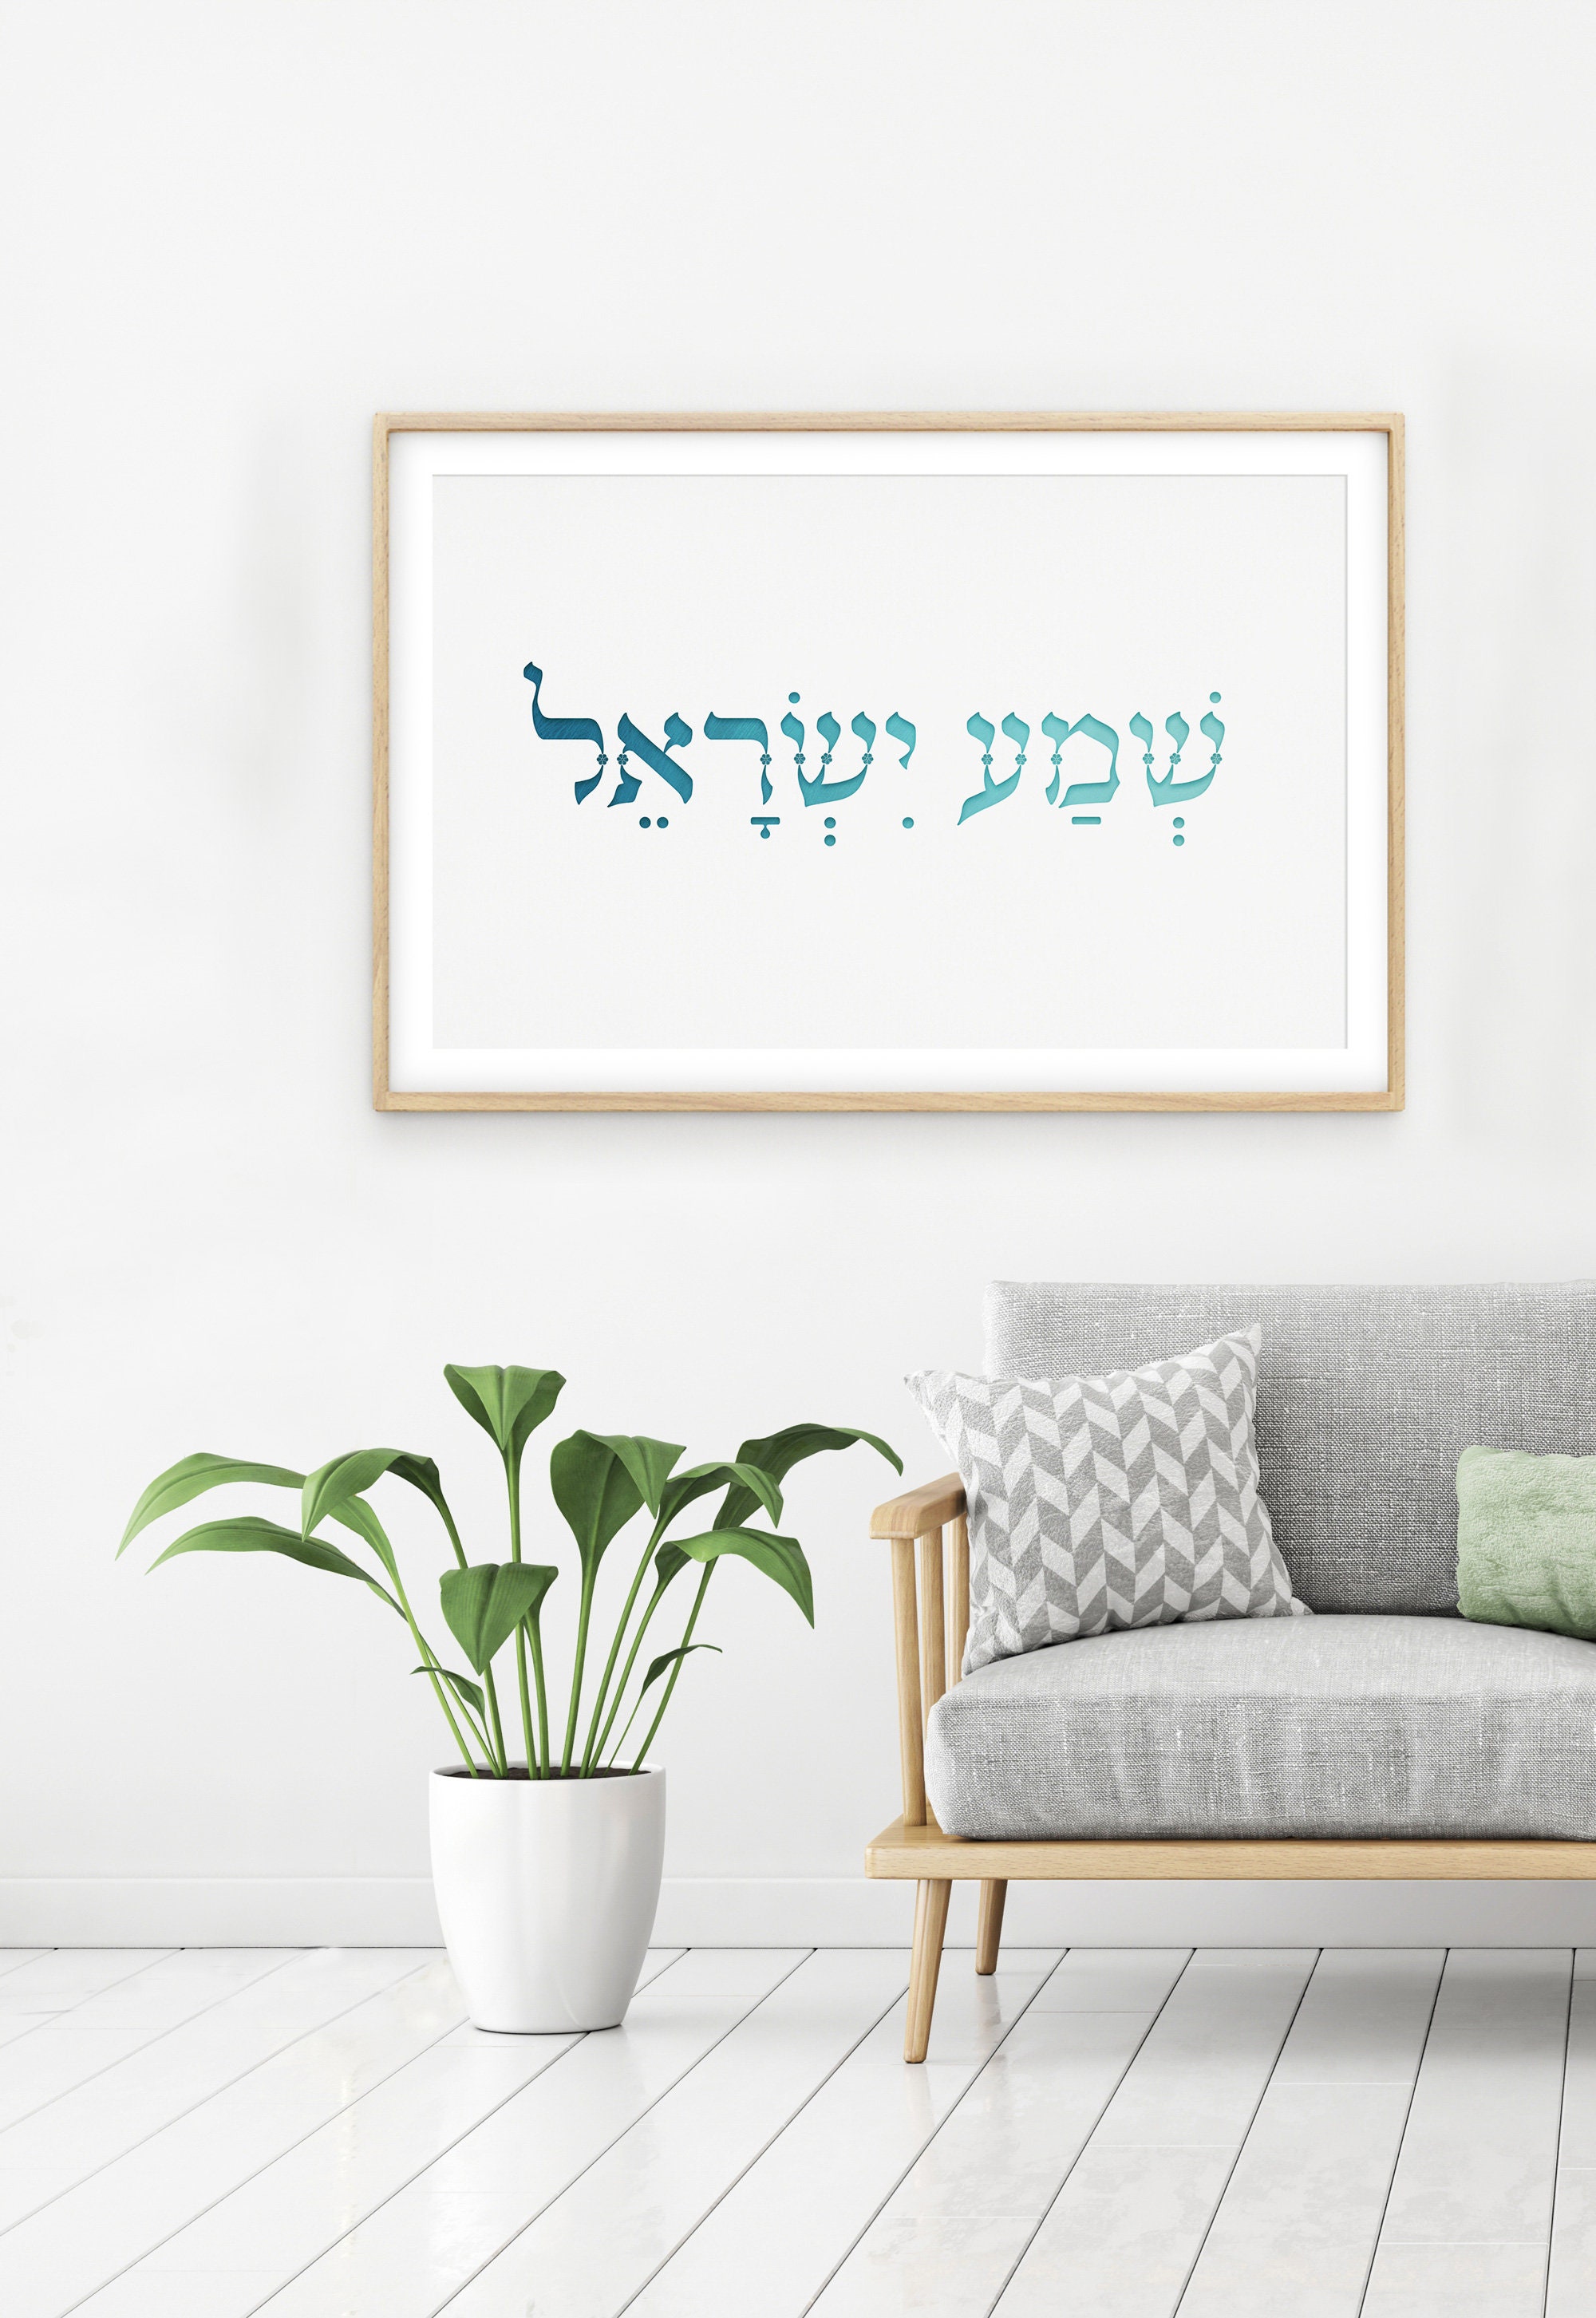 Shema Israel Jewish Prayer Hebrew Wall Sticker Living Room Bedroom Holiday  Decoration Outdoor & Indoor Sign Wall Decal - AliExpress